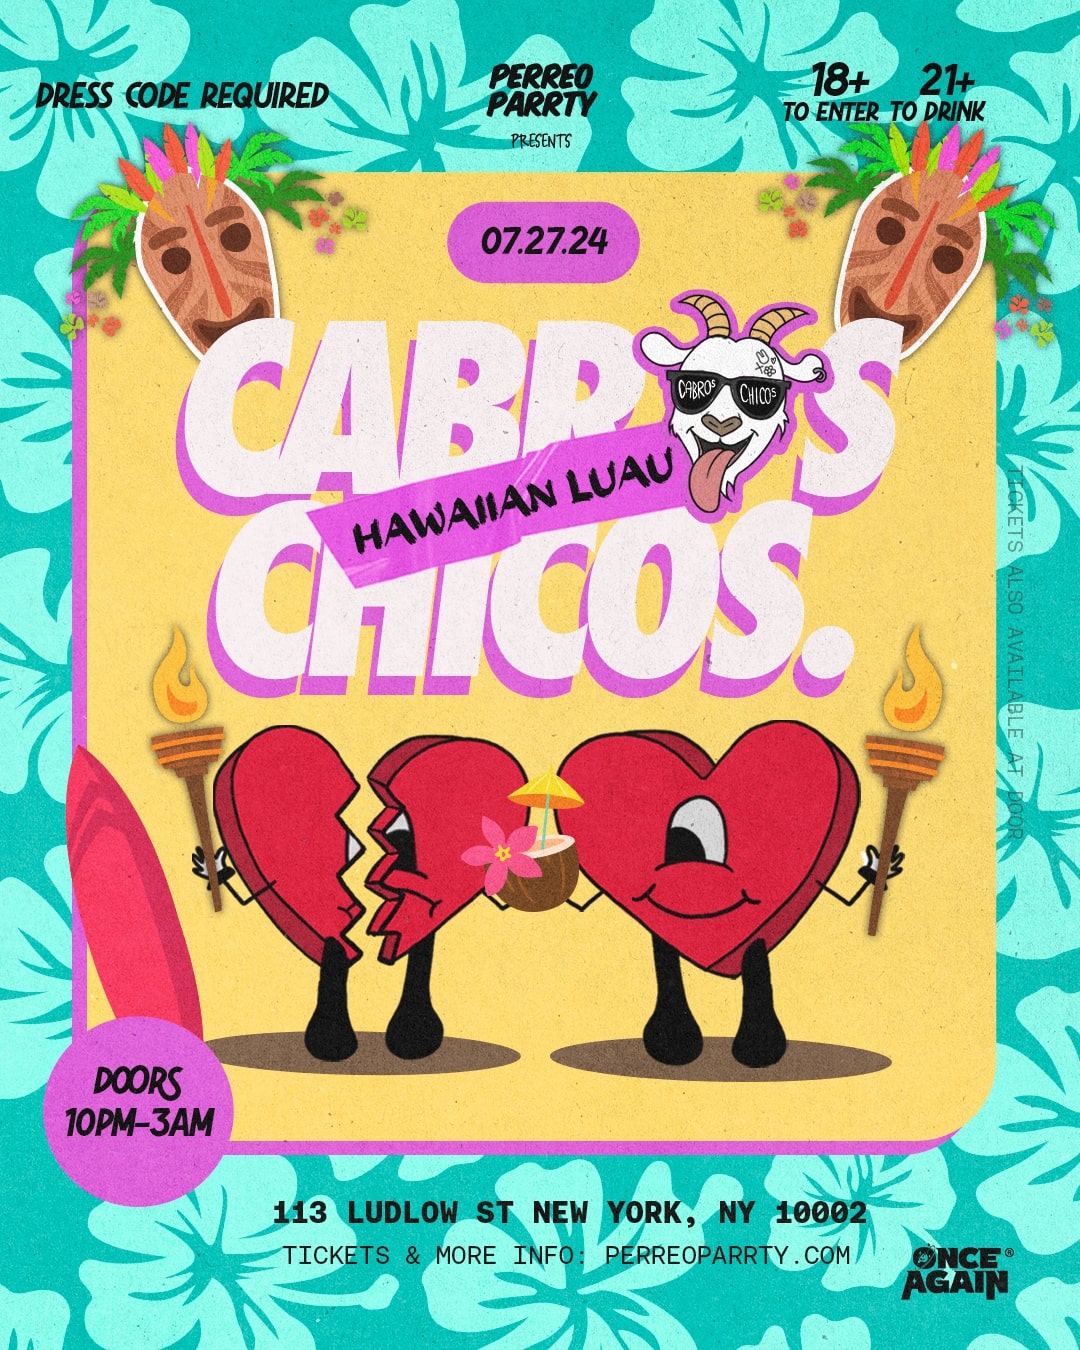 Cabros Chicos -Hawaiian Luau - 18+ Latin & Reggaetón Dance Party